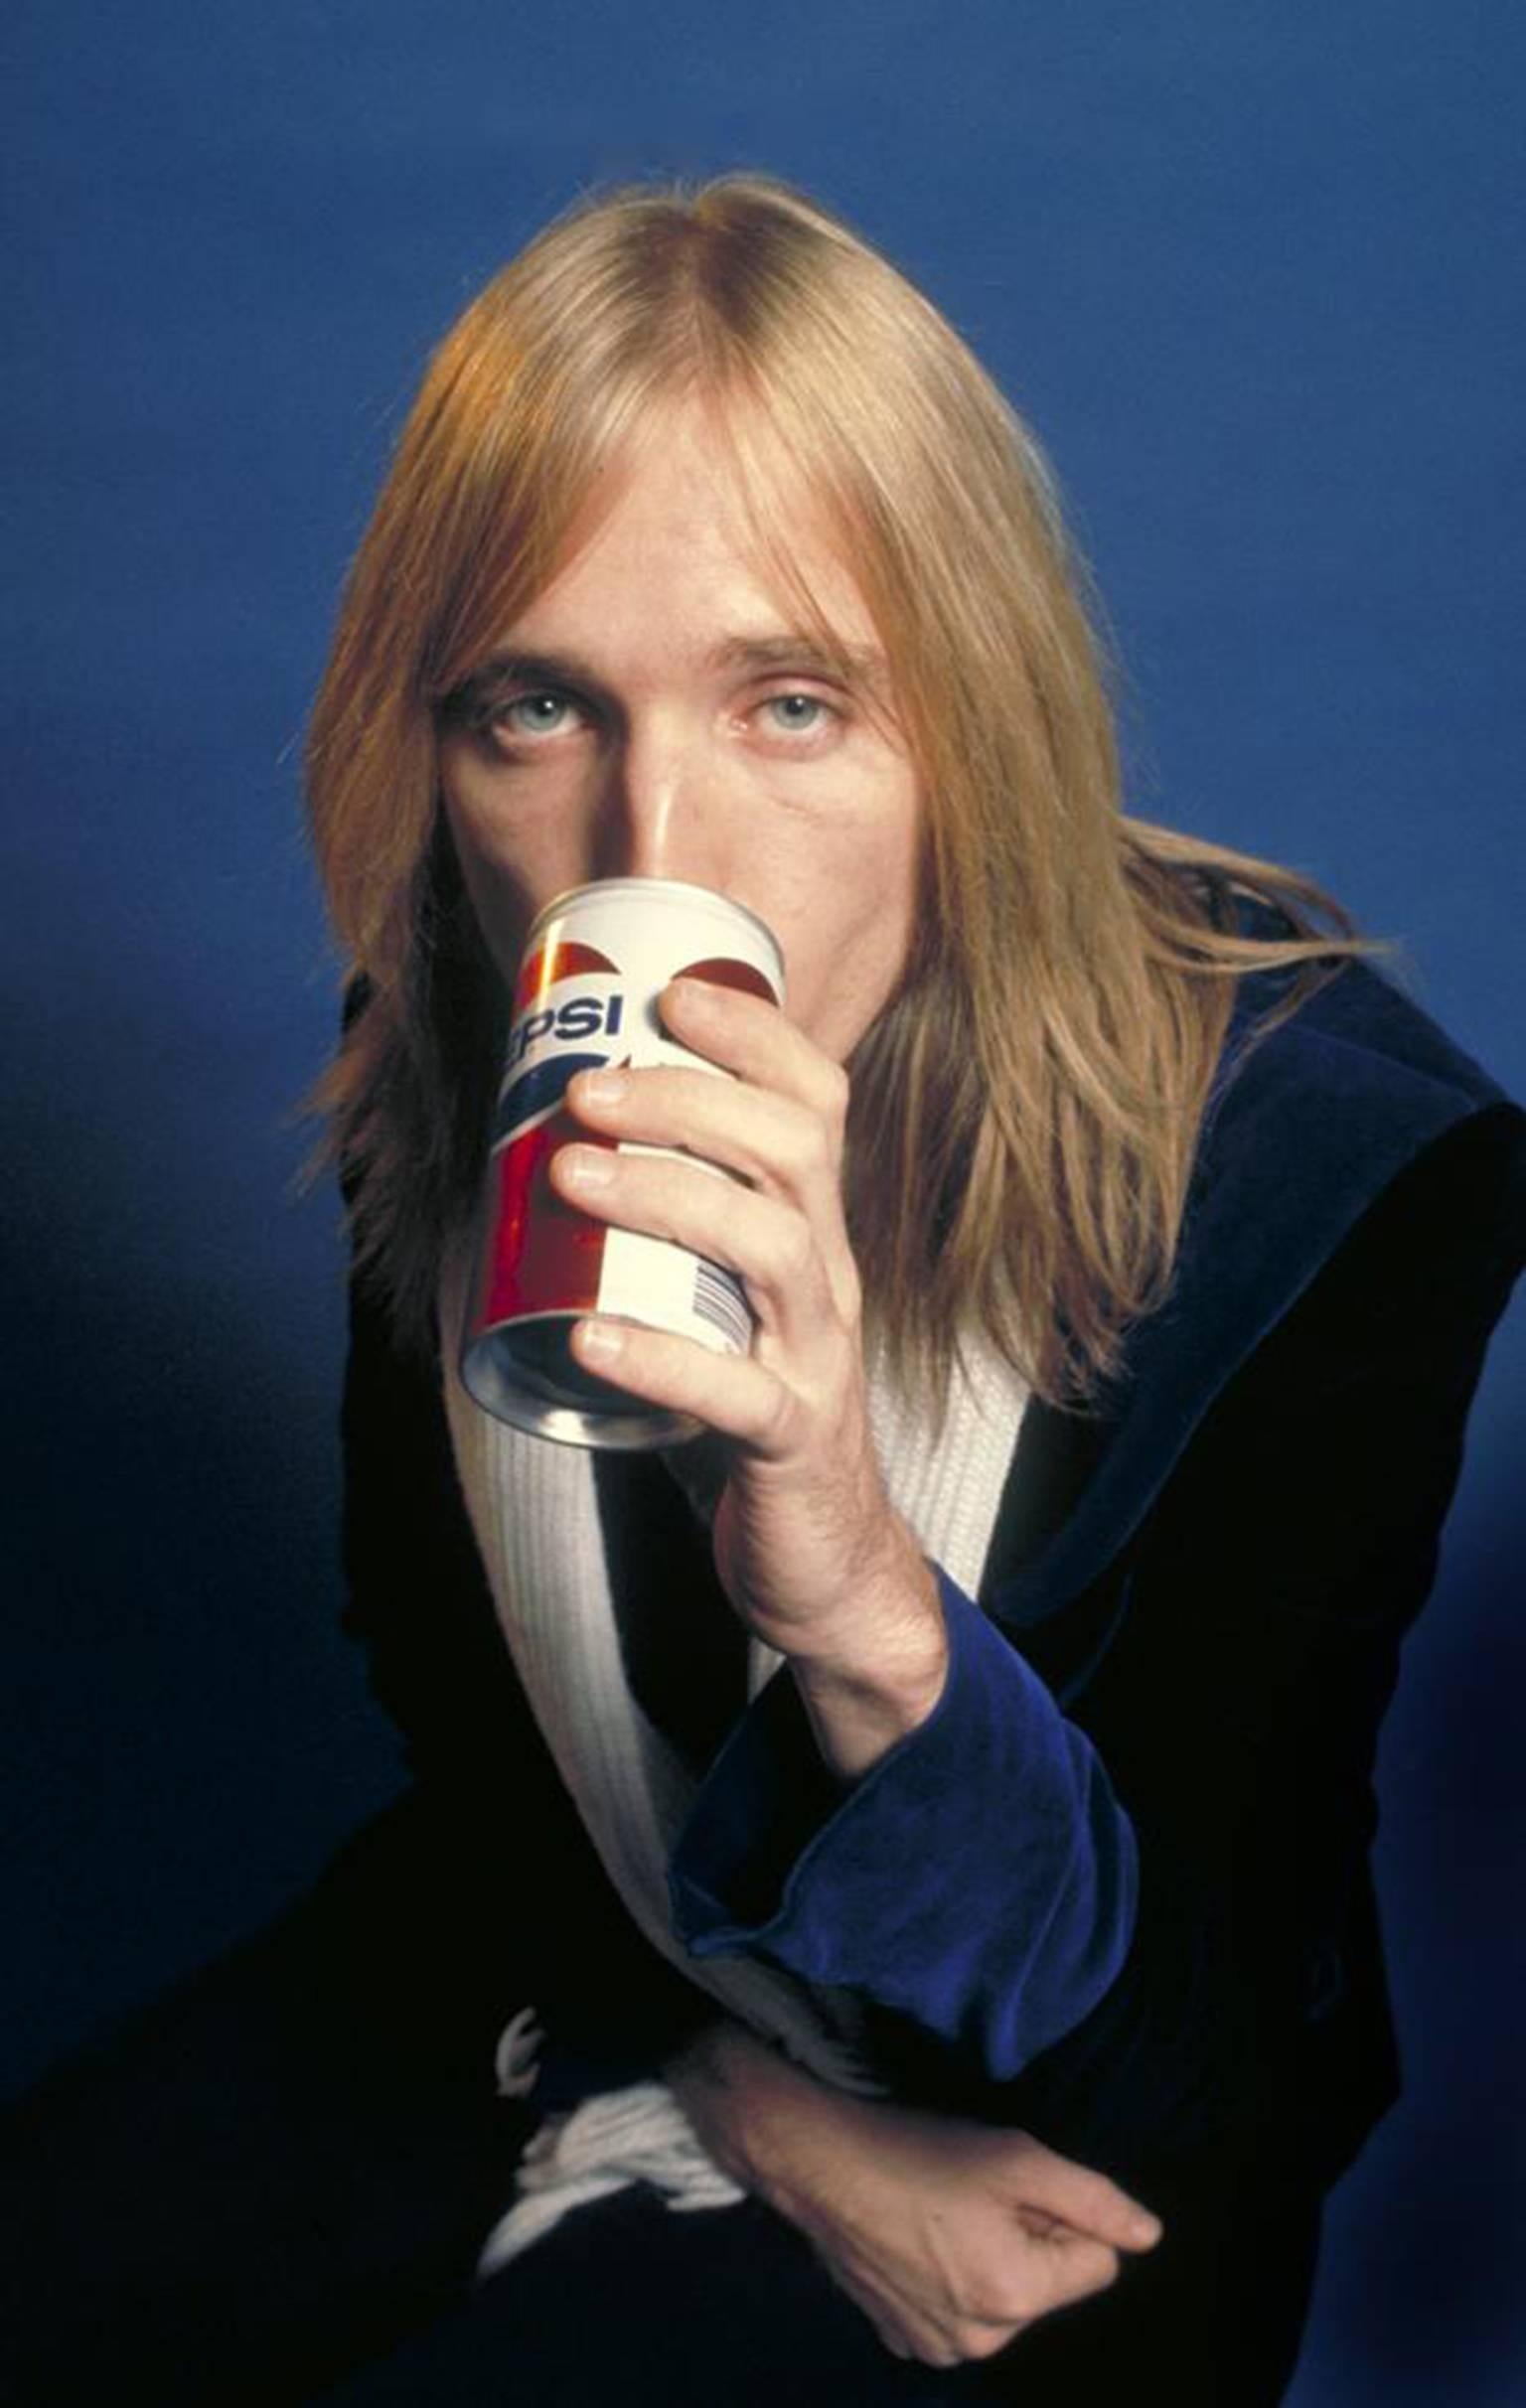 Tom Petty, 1973